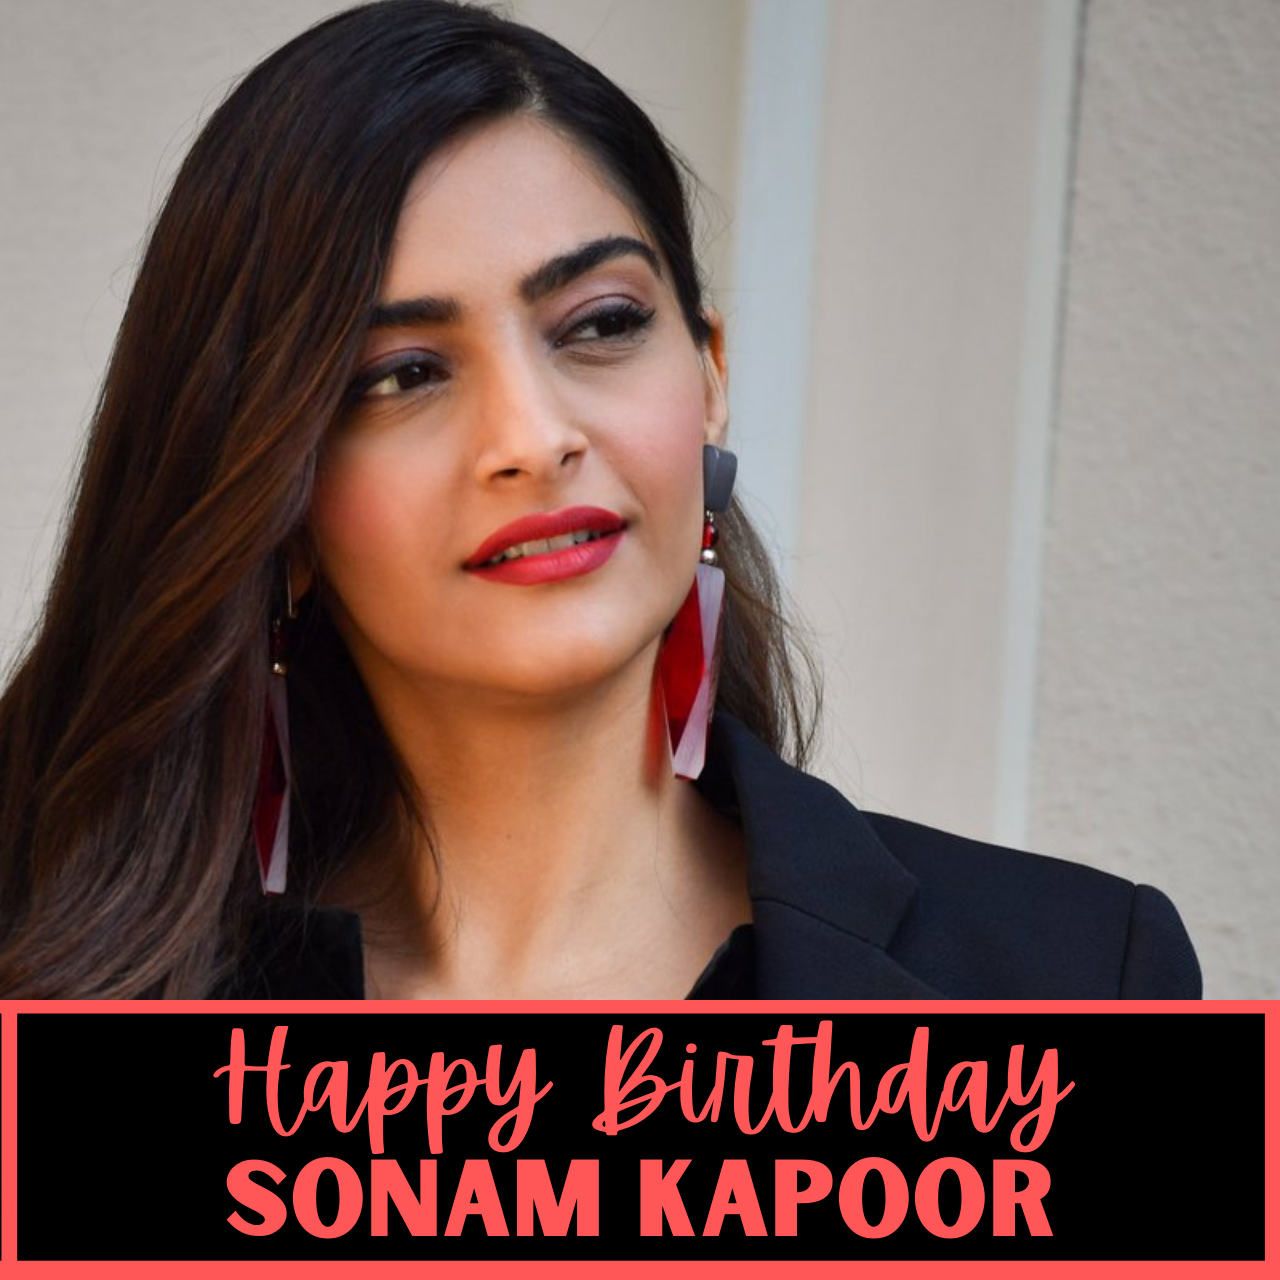 Happy Birthday Sonam Kapoor wishes, Photos (Image), Pics, and WhatsApp Status Video Download